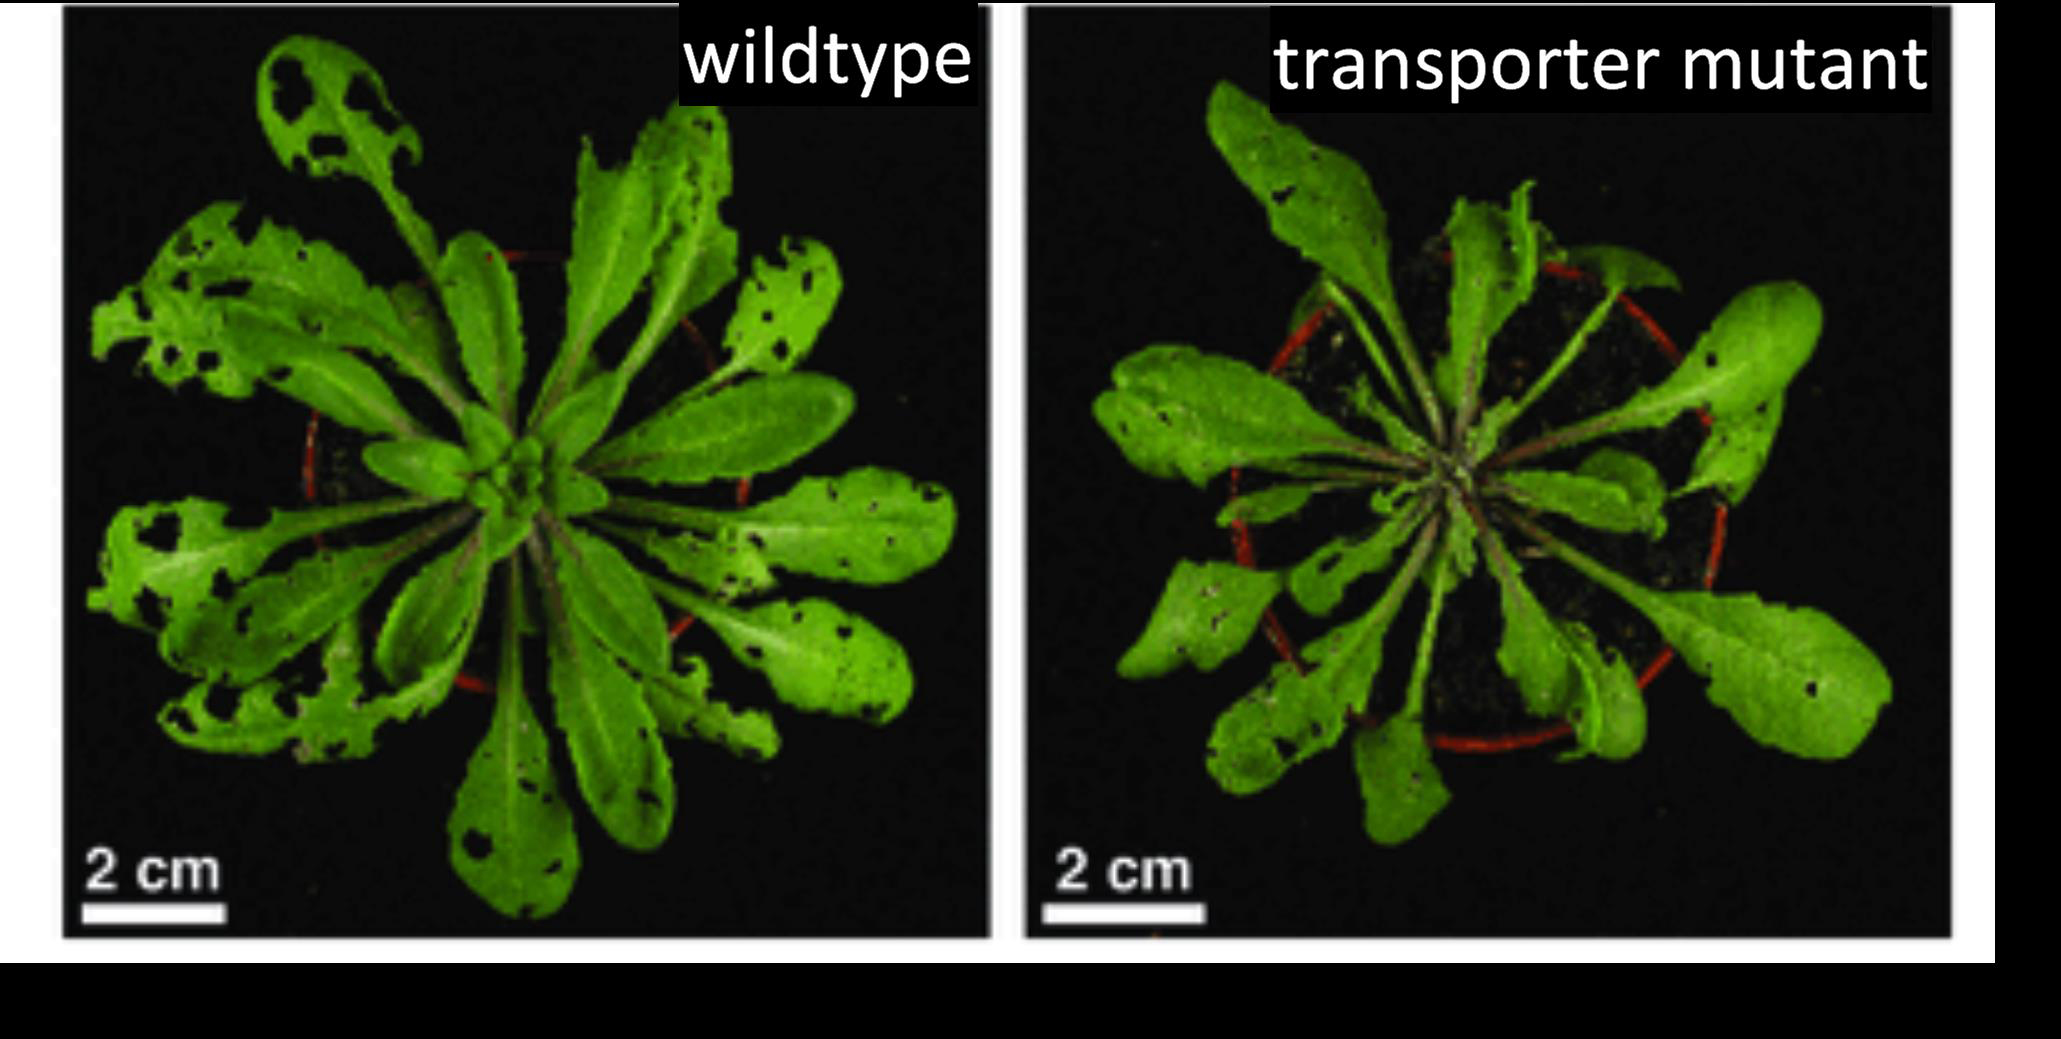 Wildtype and transporter mutant Arabidopsis plant